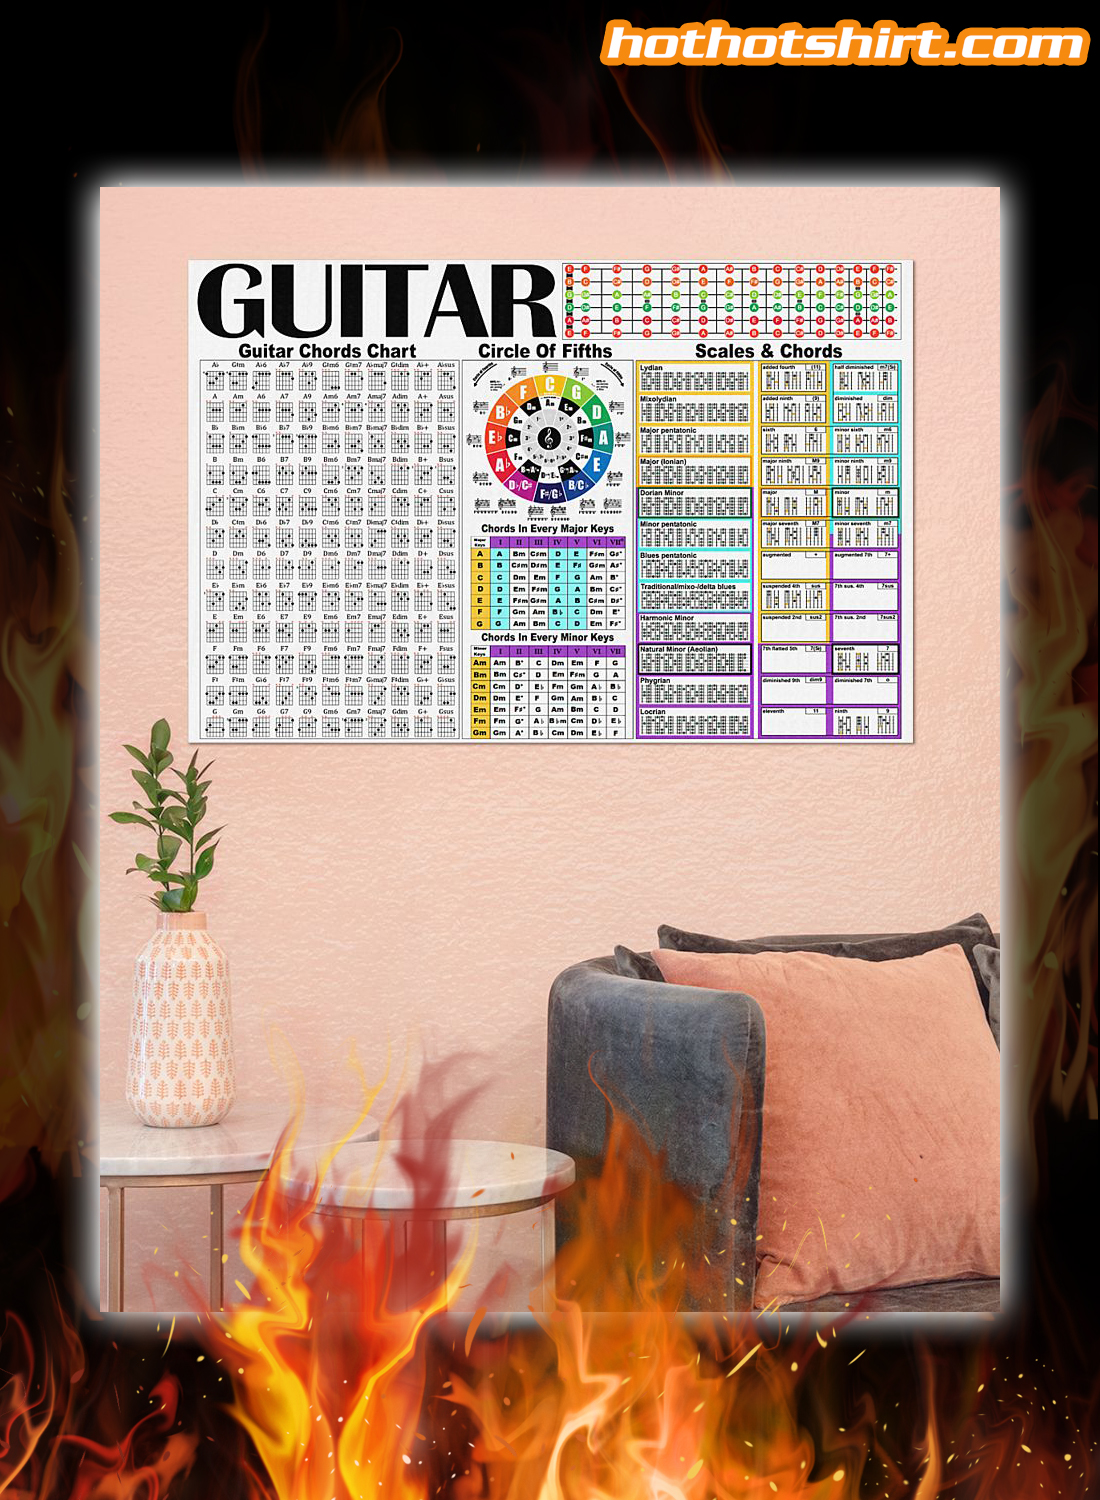 Personalized guitar i pick you lyrics poster